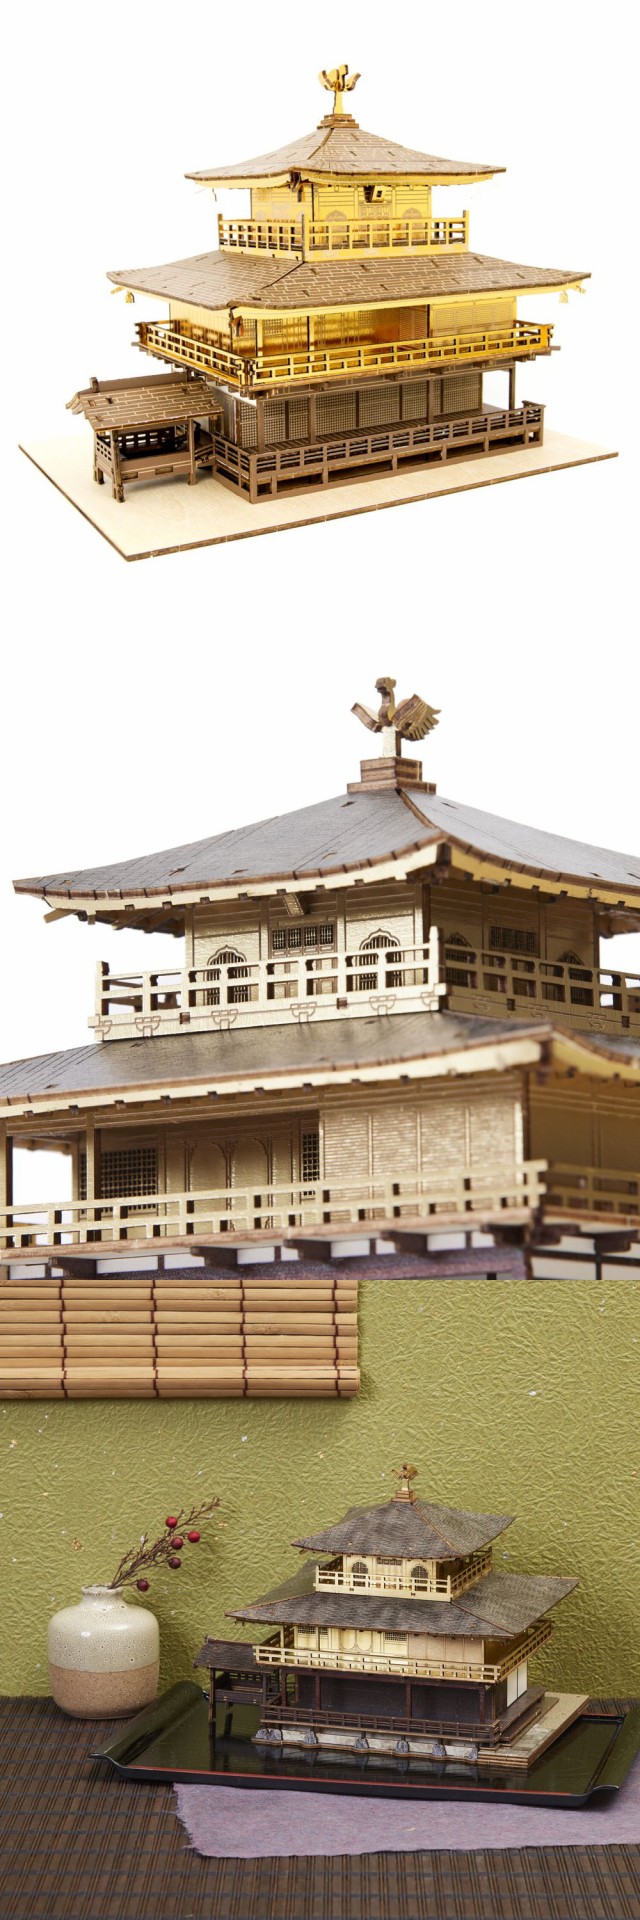 kigumi 金閣寺 カラー | ki-gu-mi エーゾーン | 立体パズル 木製 お寺